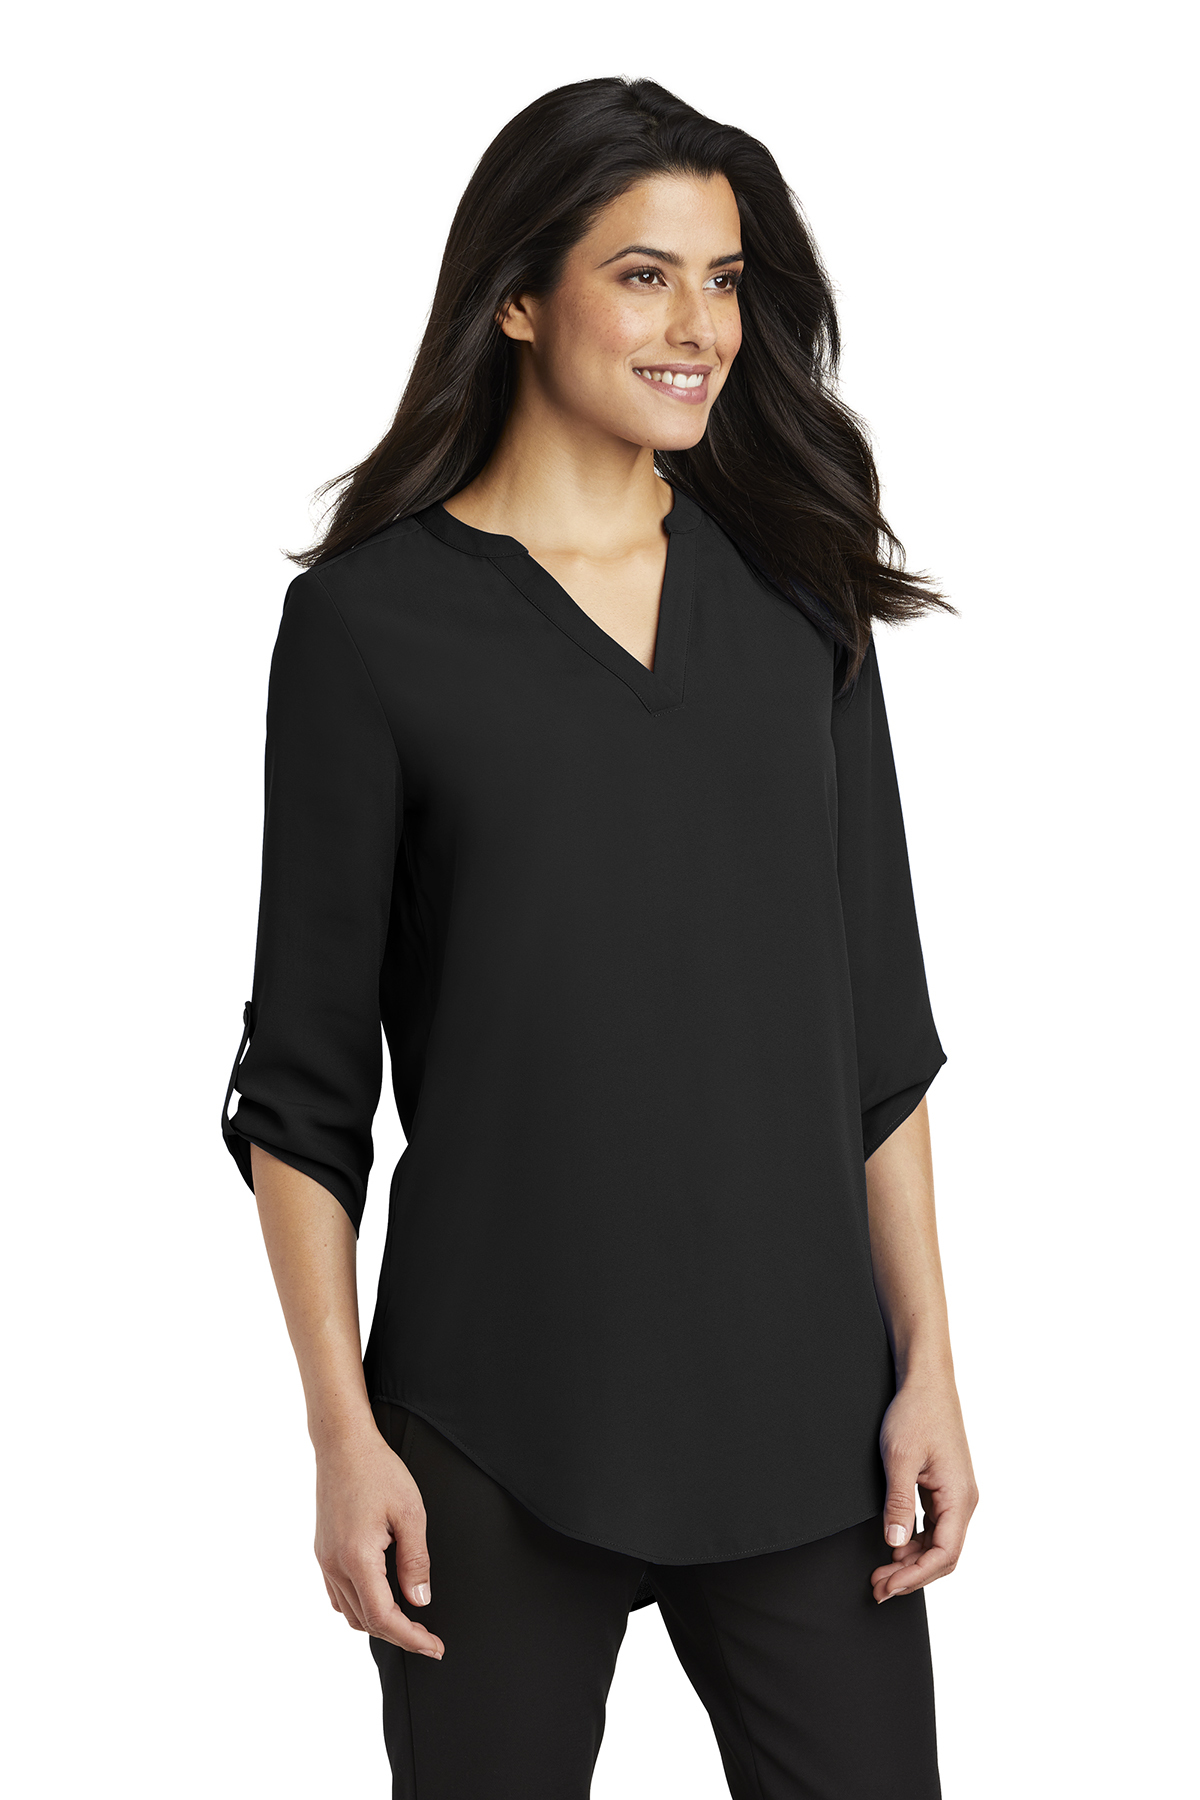 Ladies Authority Blouse 3/4-Sleeve Tunic | Port | Port Product Authority